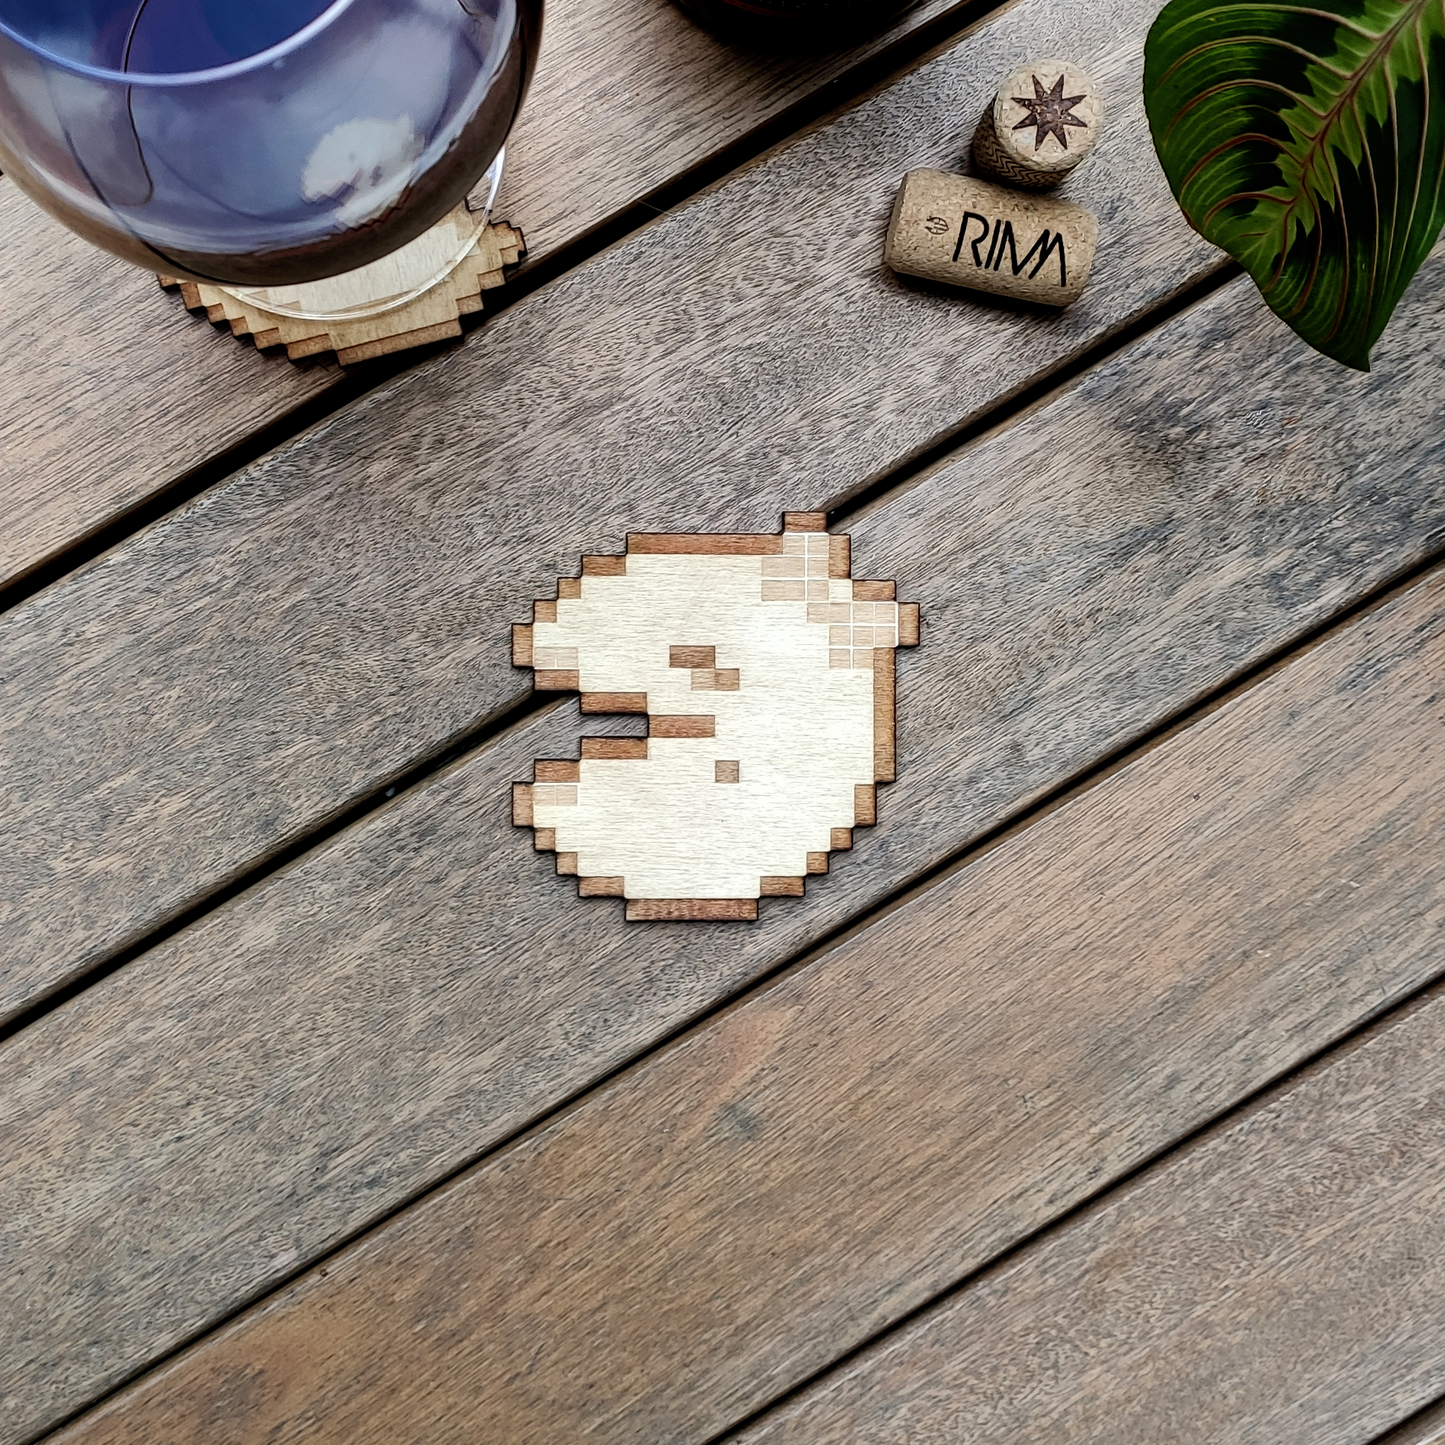 Set of 6 Pacman Wood Coasters - Housewarming Gift - Pac man - Videogame